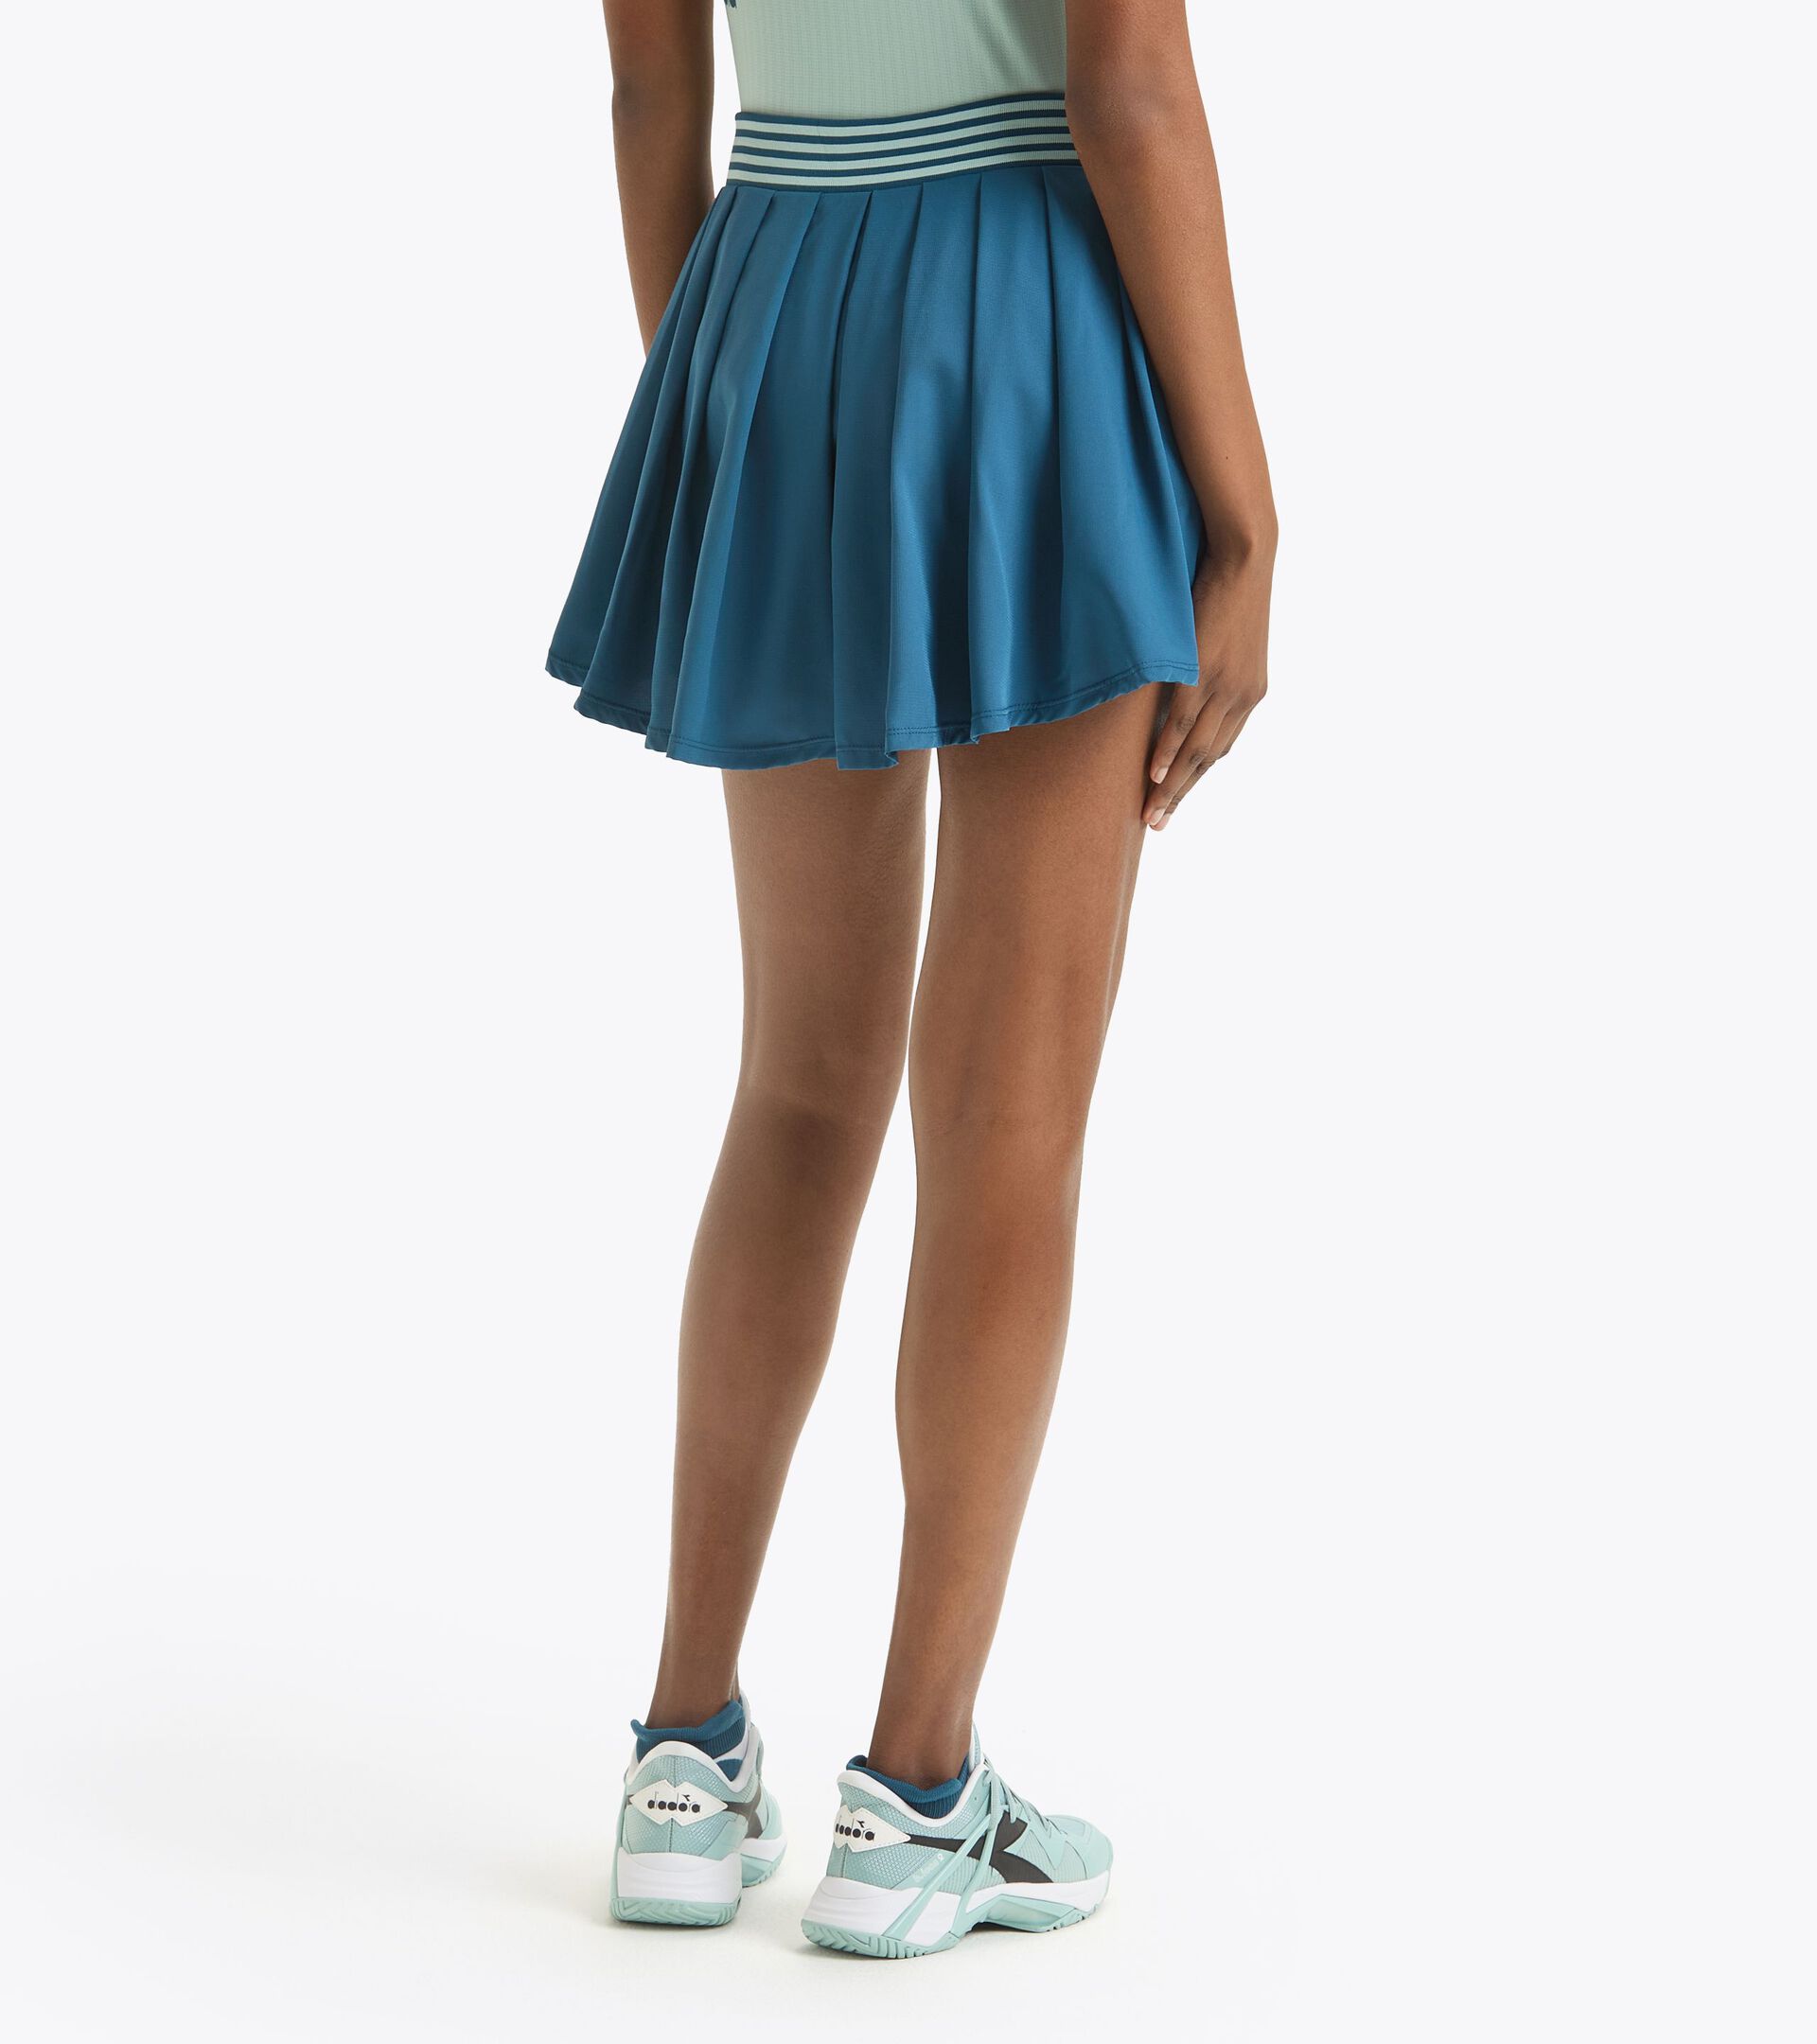 Tennis skirt - Women’s L. SKIRT ICON LEGION BLUE - Diadora